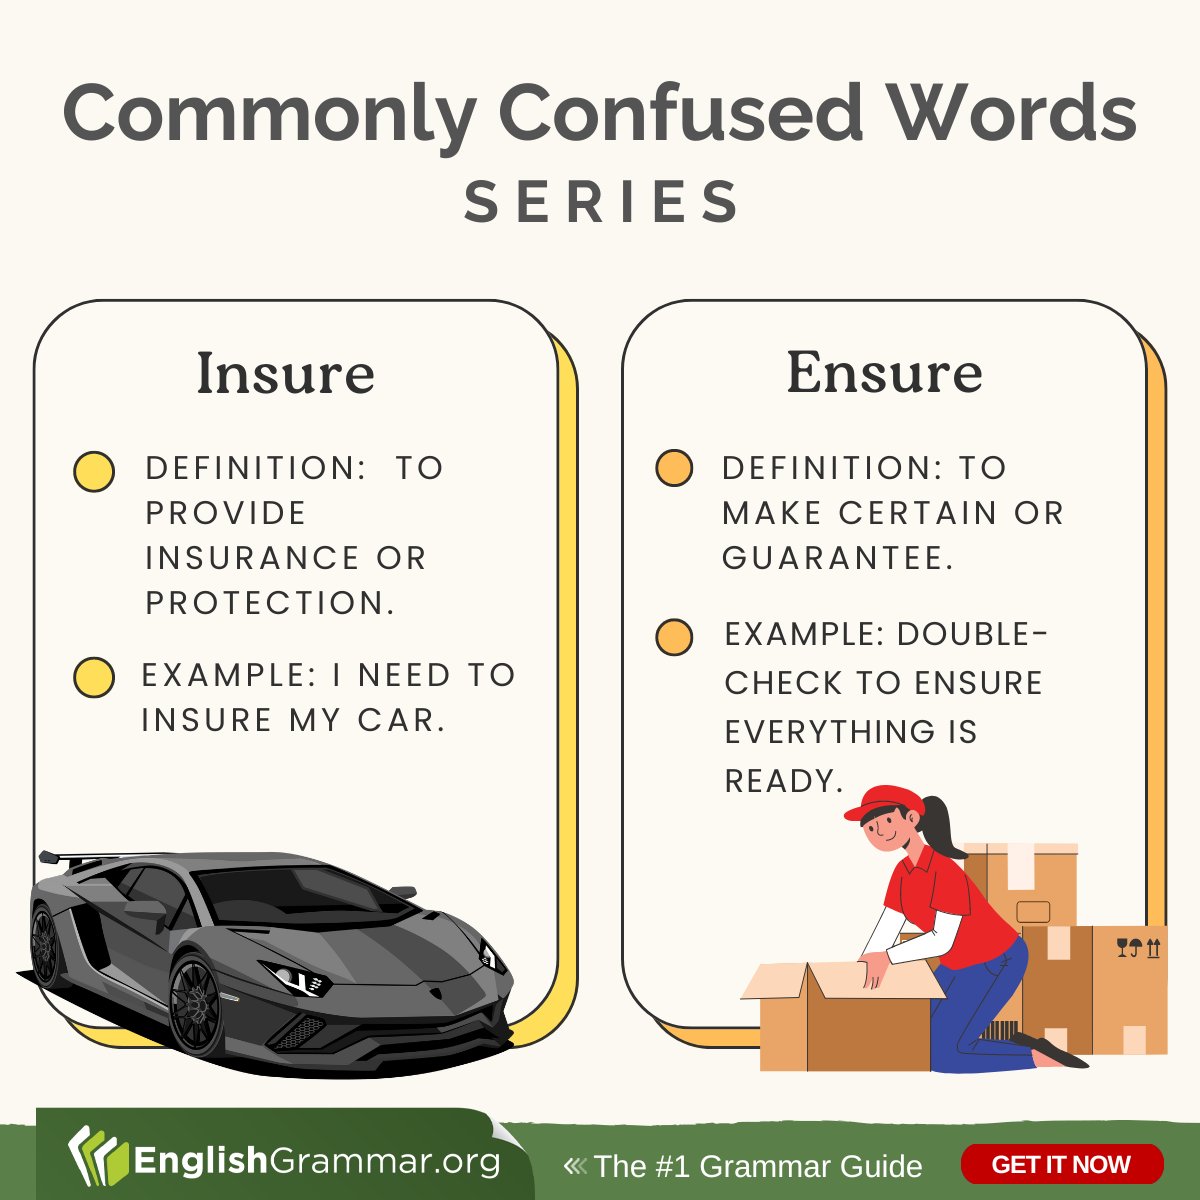 Insure vs. Ensure

#vocabulary #writing #amwriting